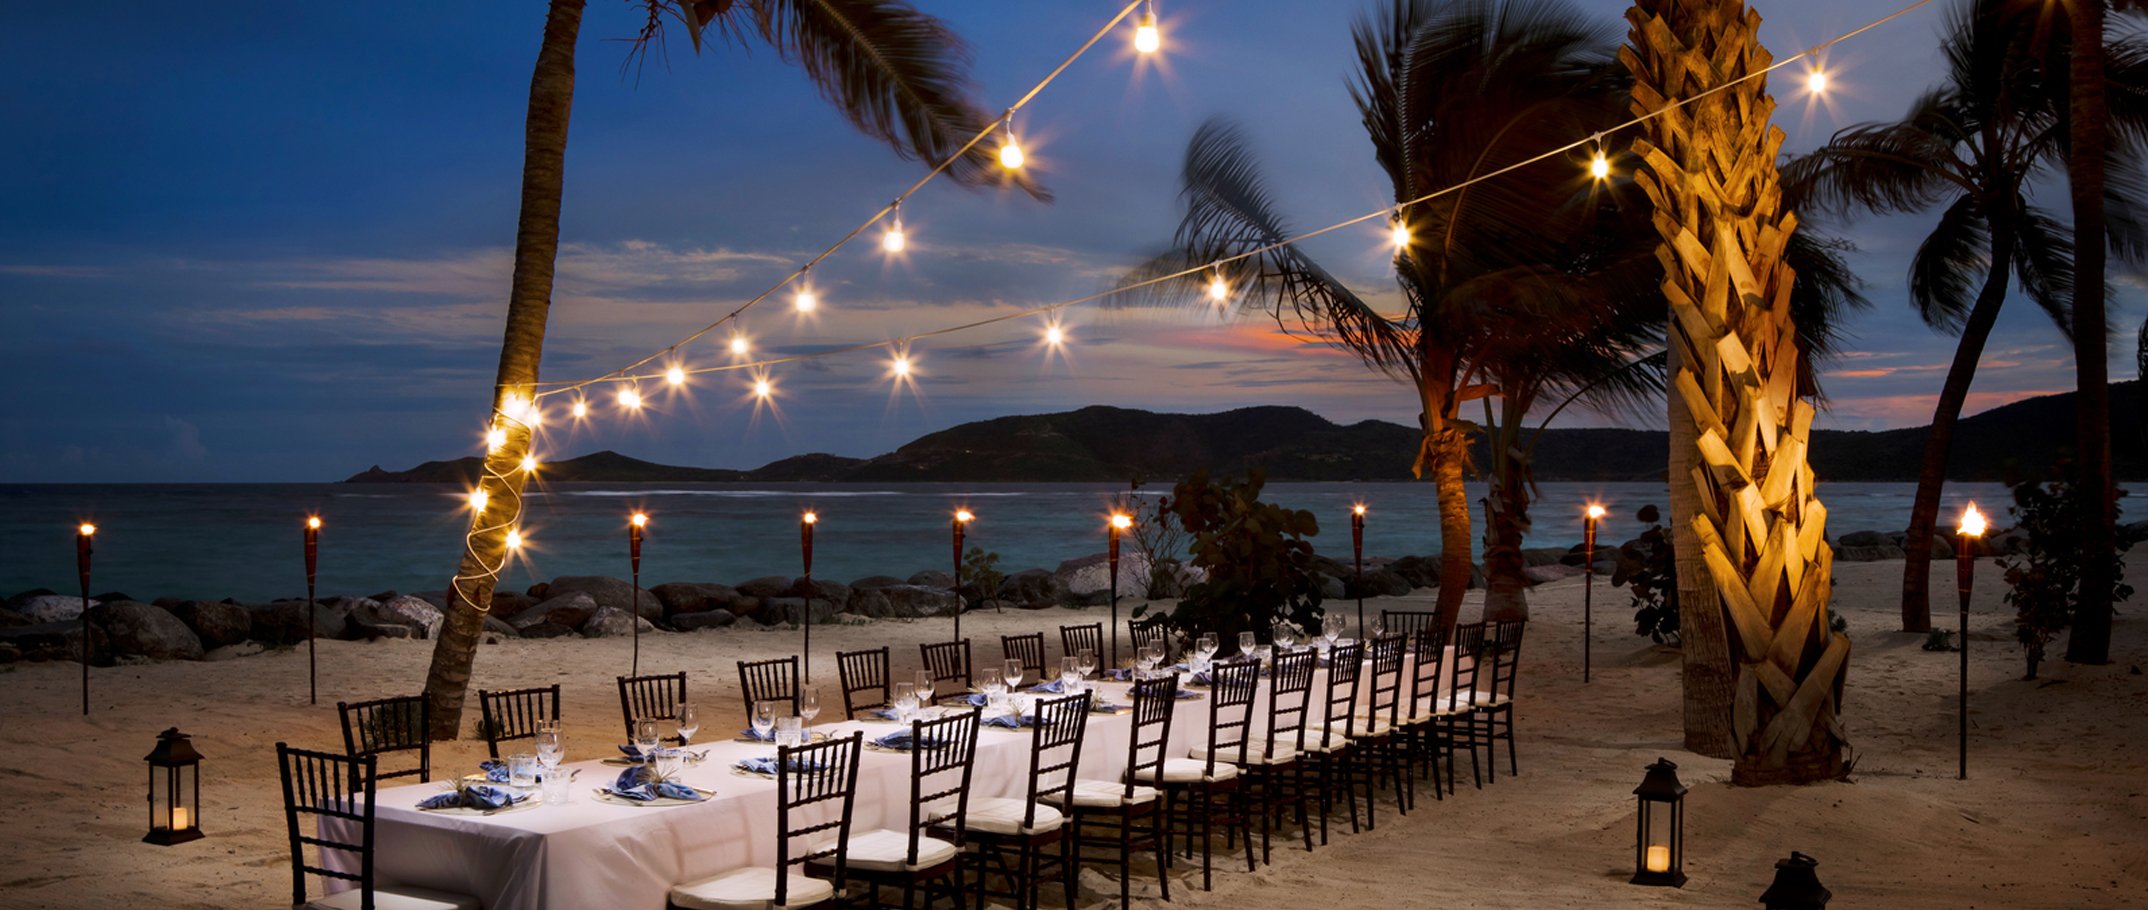 Necker Island beach-pavilion-outdoor-dining.jpeg